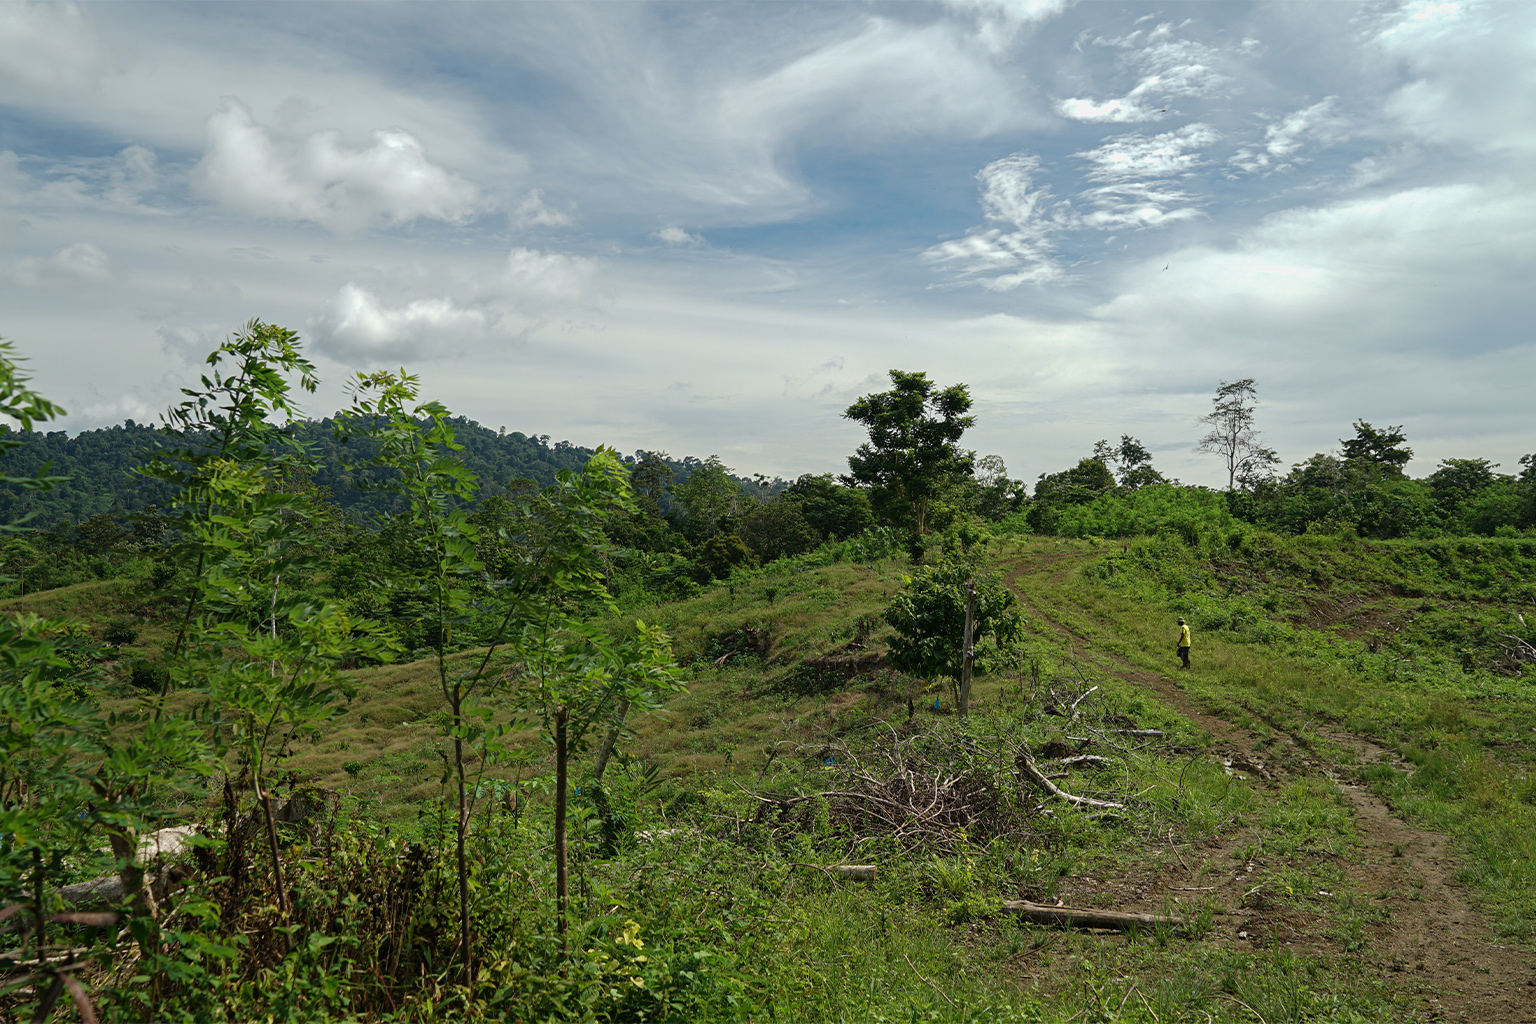 Cot Girek sits between a vast palm oil plantation and Leuser ecosystem.